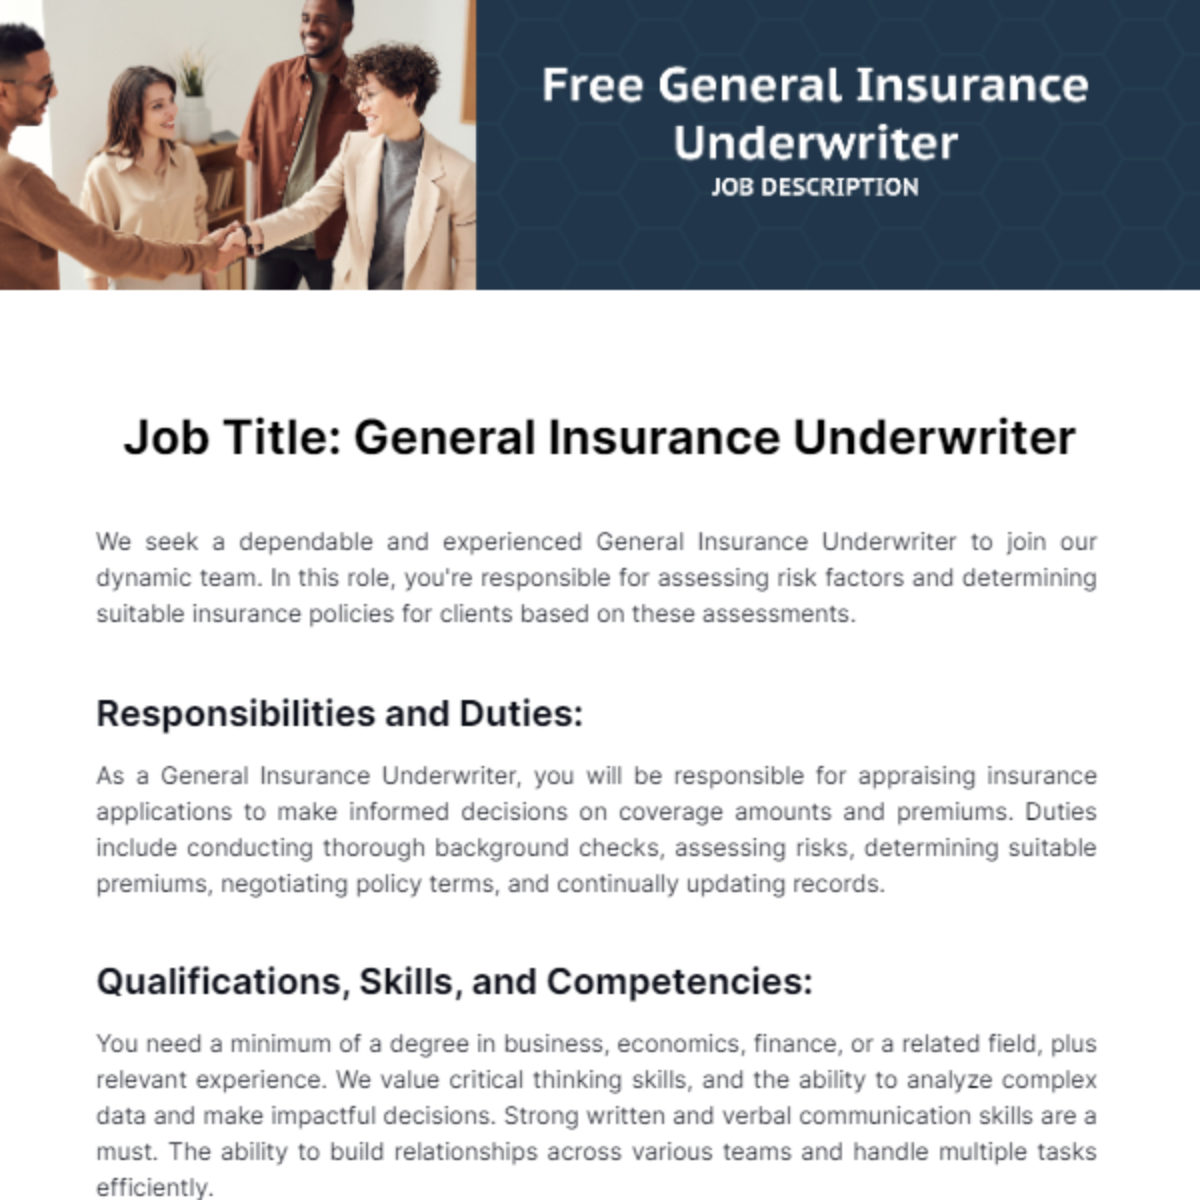 General Insurance Underwriter Job Description Template